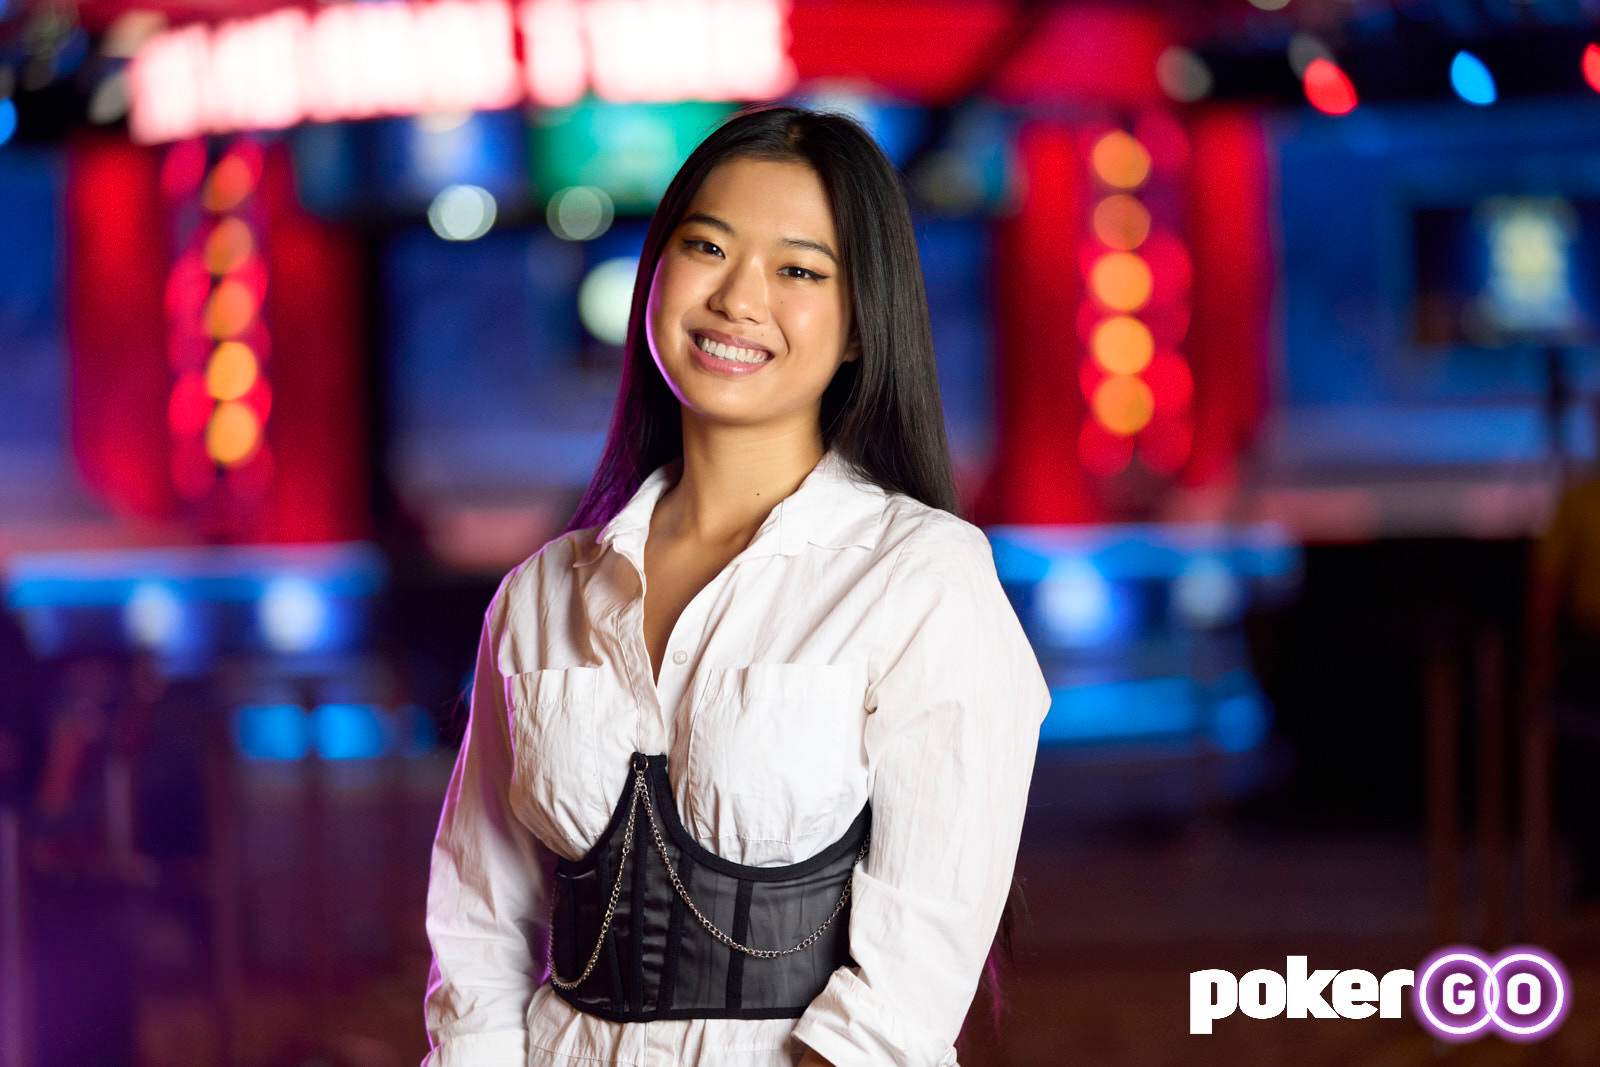 Woman Grandmaster Qiyu ‘Nemo’ Zhou Explores Career as Poker Professional at the WSOP